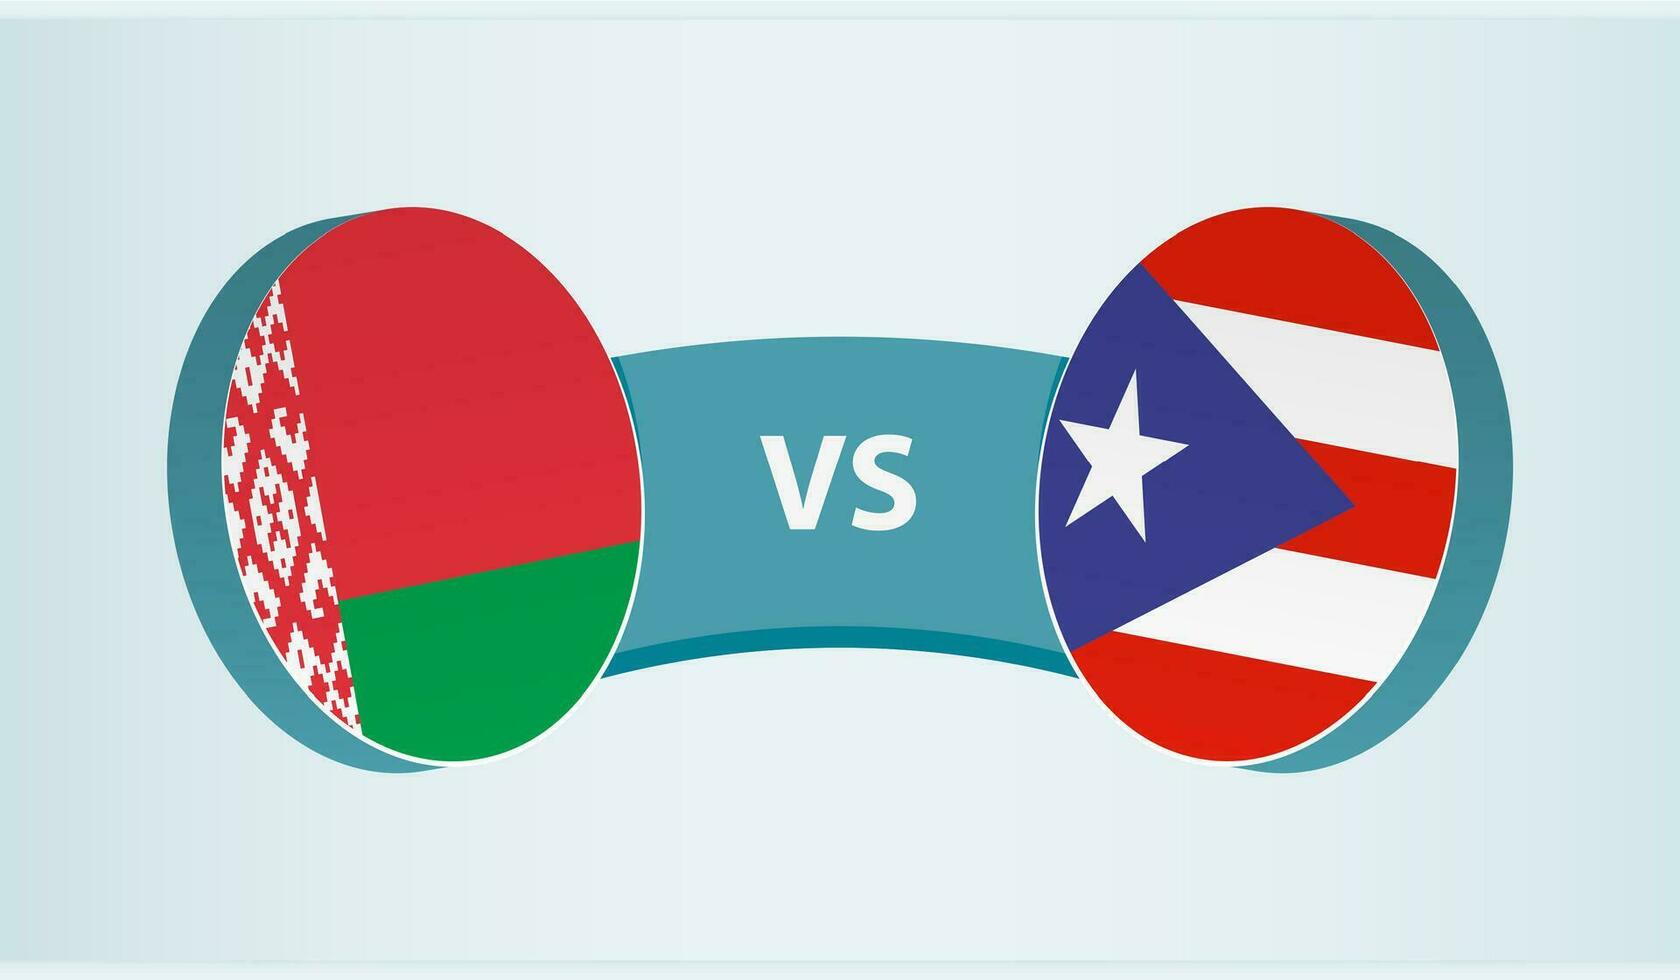 Belarus versus Puerto Rico, team sports competition concept. vector